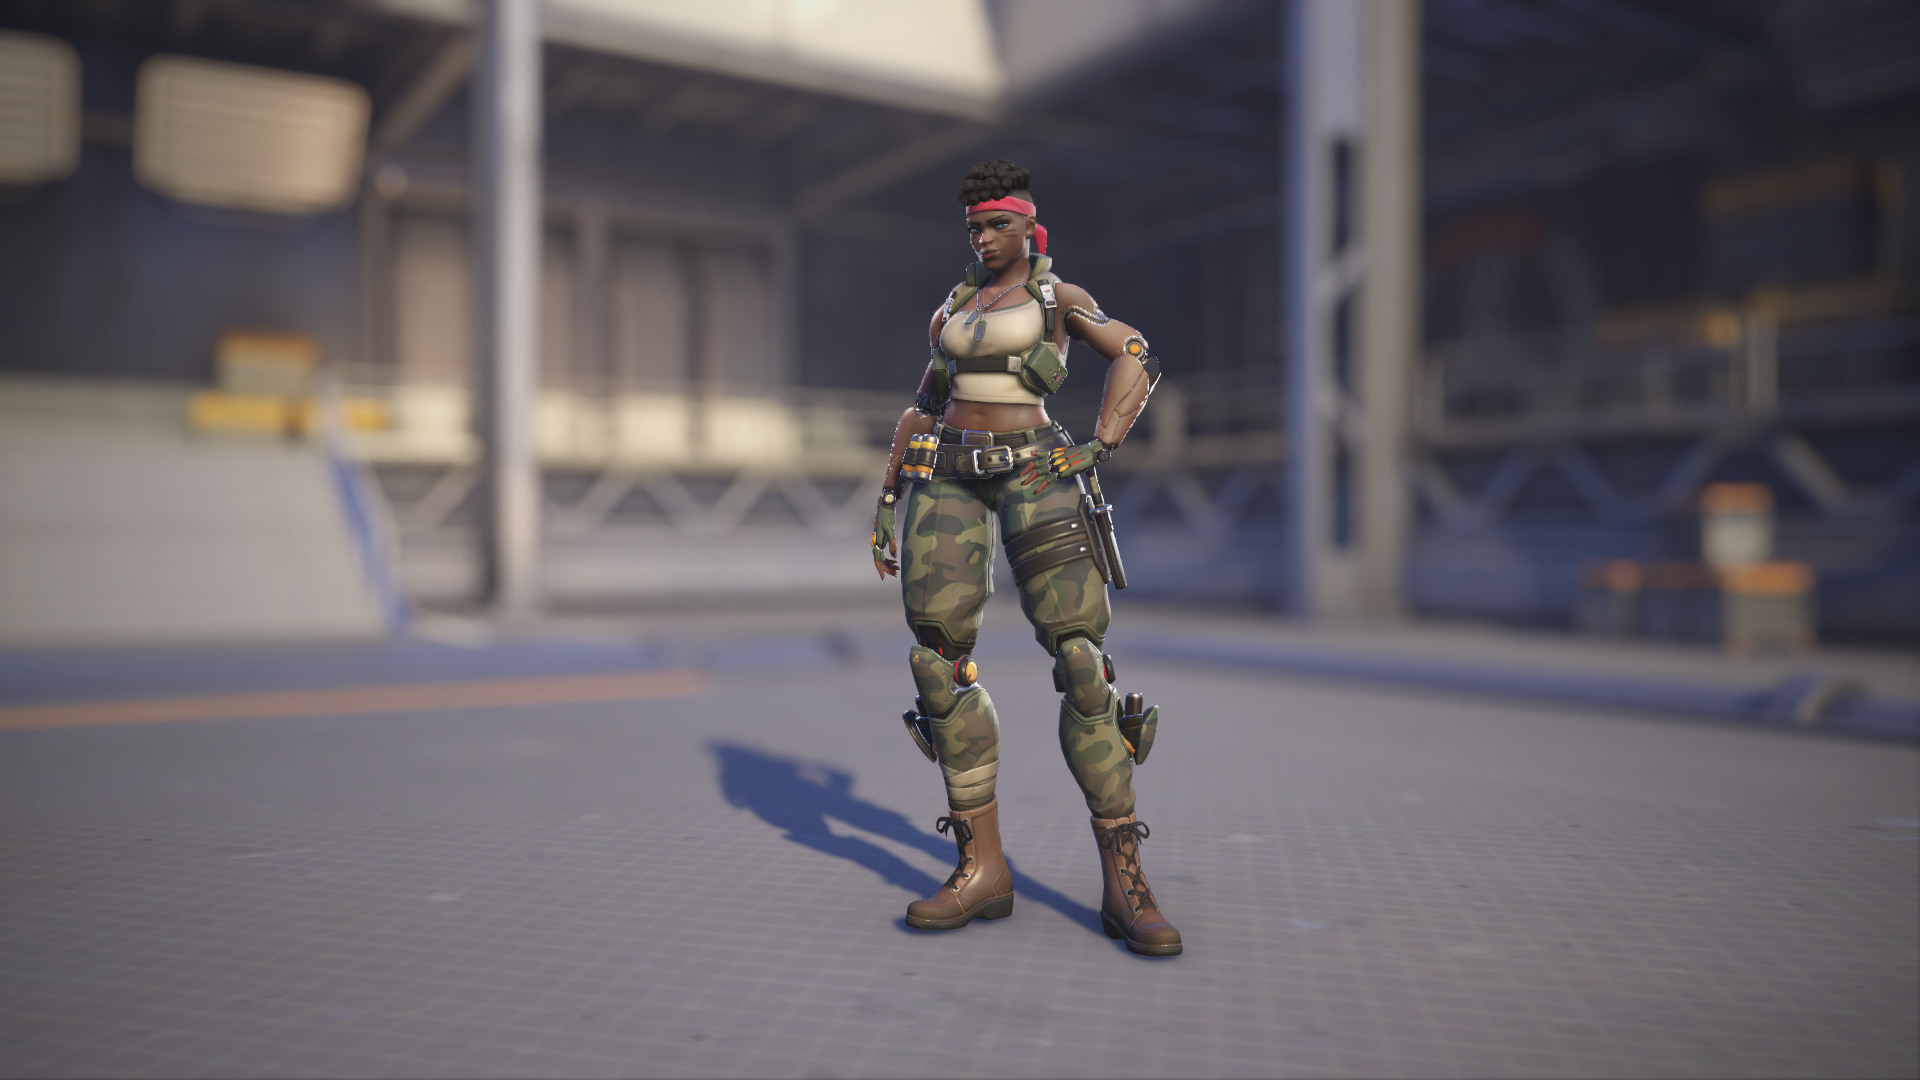 Sojourn models her Commando skin in Overwatch 2.